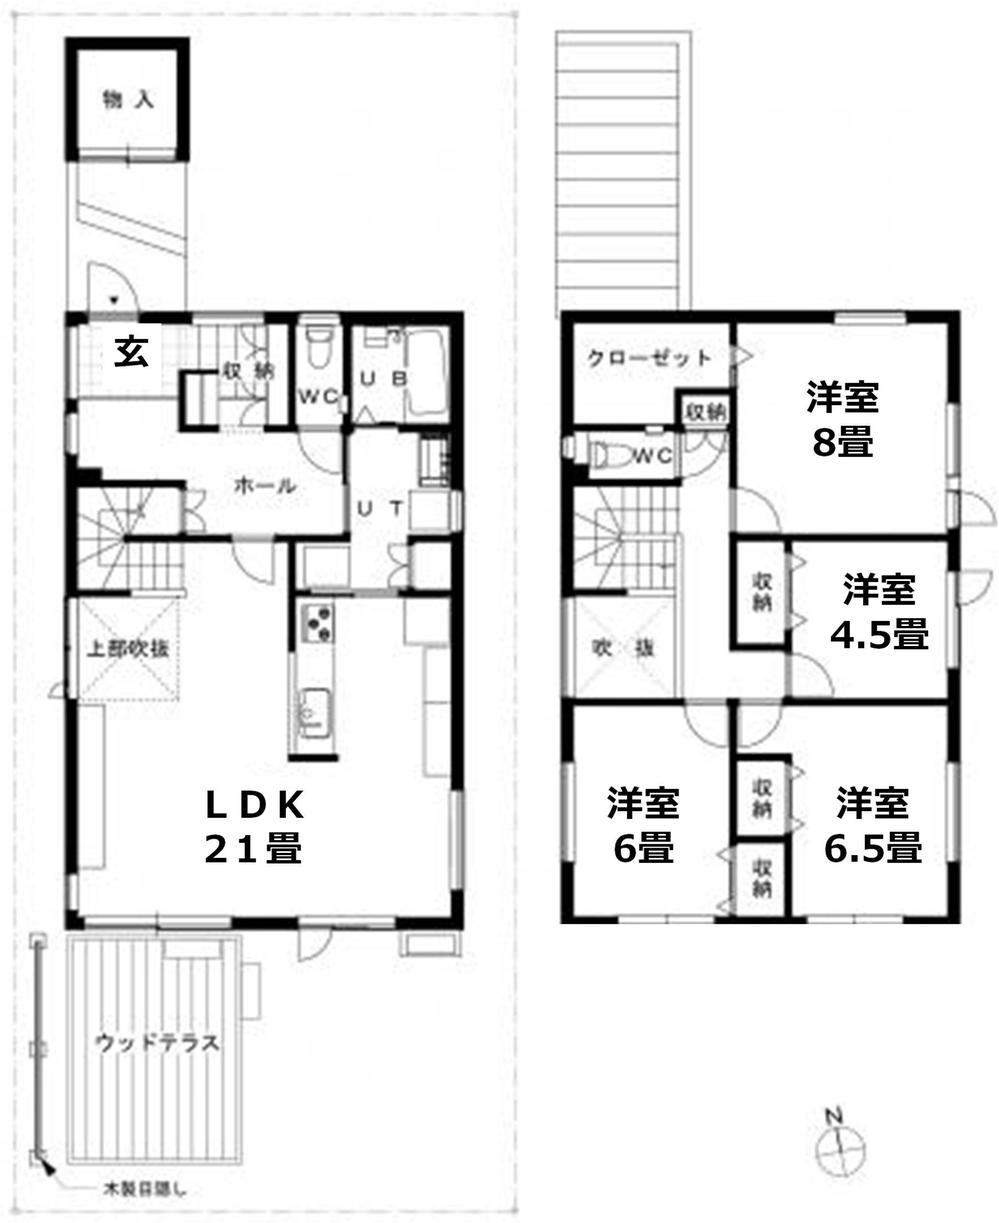 Floor plan. (B Building), Price 26.5 million yen, 4LDK, Land area 163.74 sq m , Building area 130.84 sq m